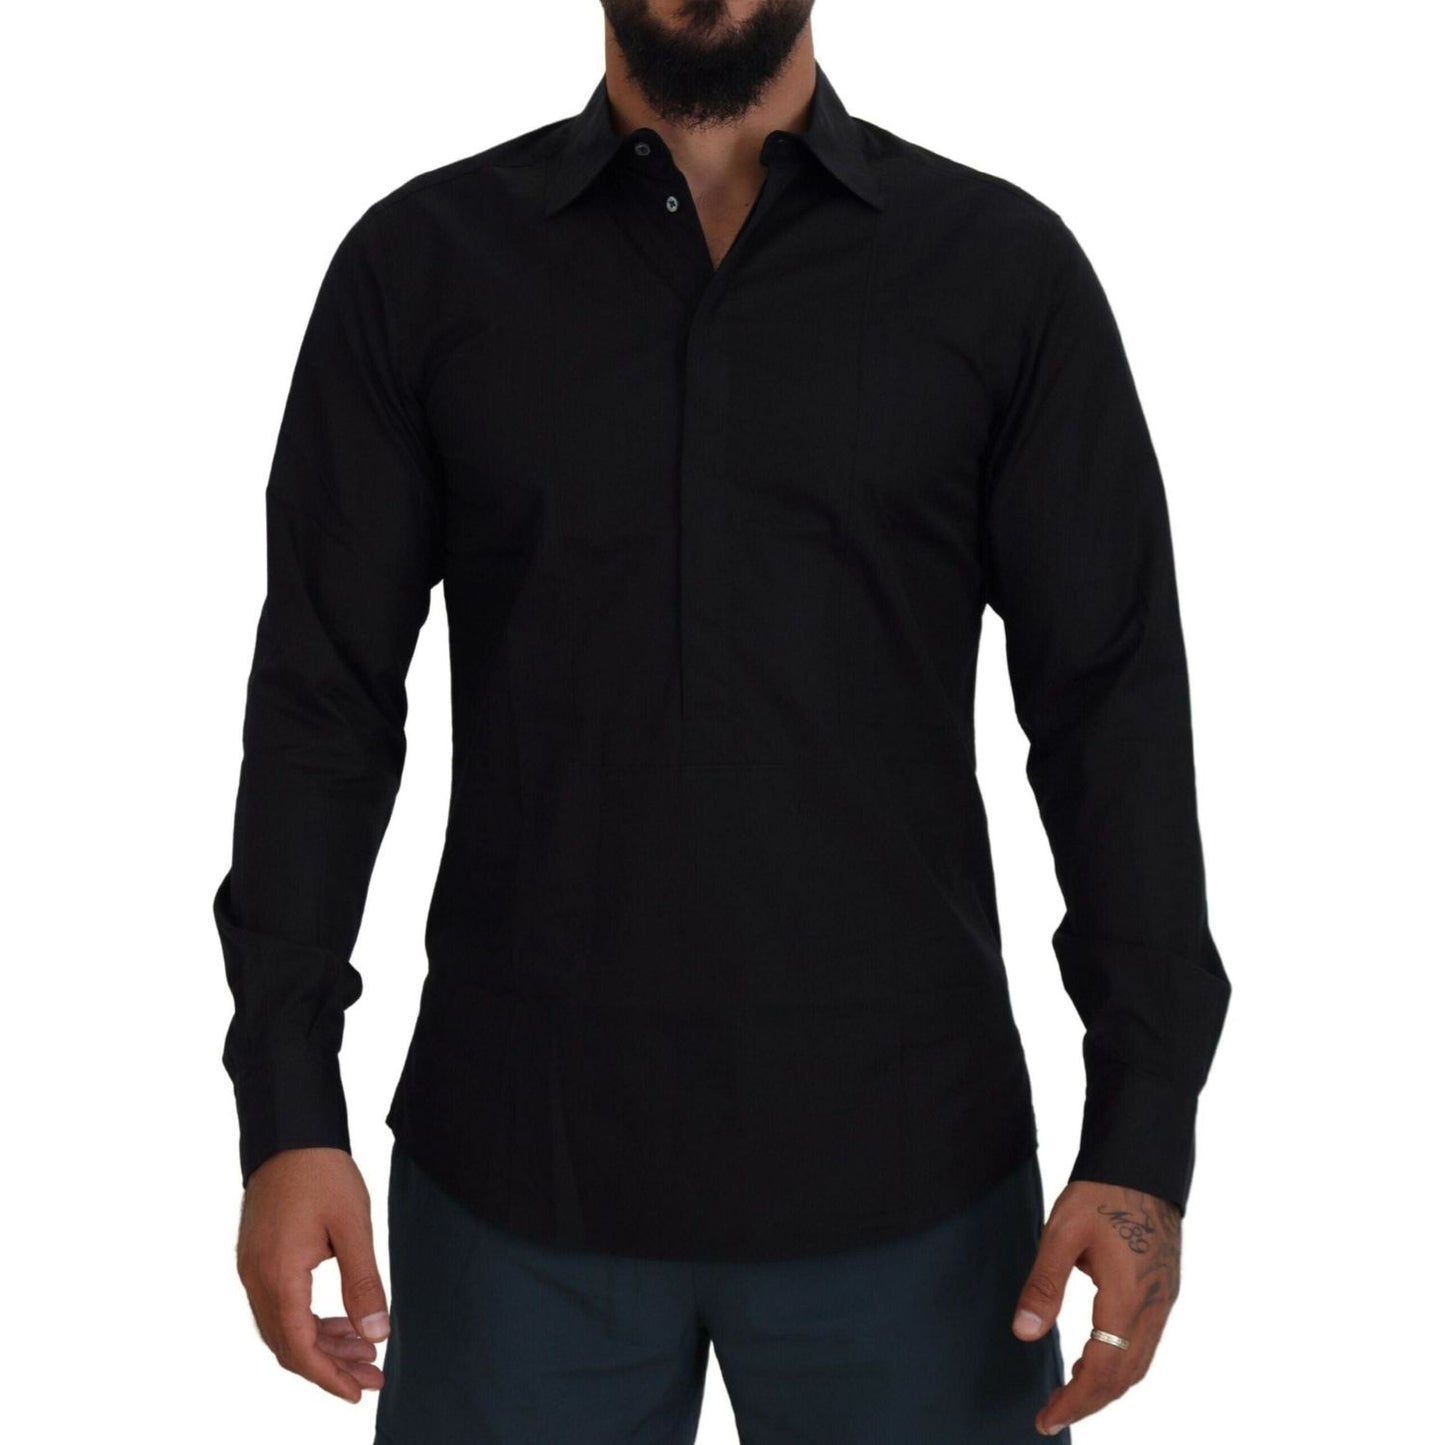 Dolce & Gabbana Elegant Slim Fit Formal Black Dress Shirt black-cotton-long-sleeves-dress-formal-shirt